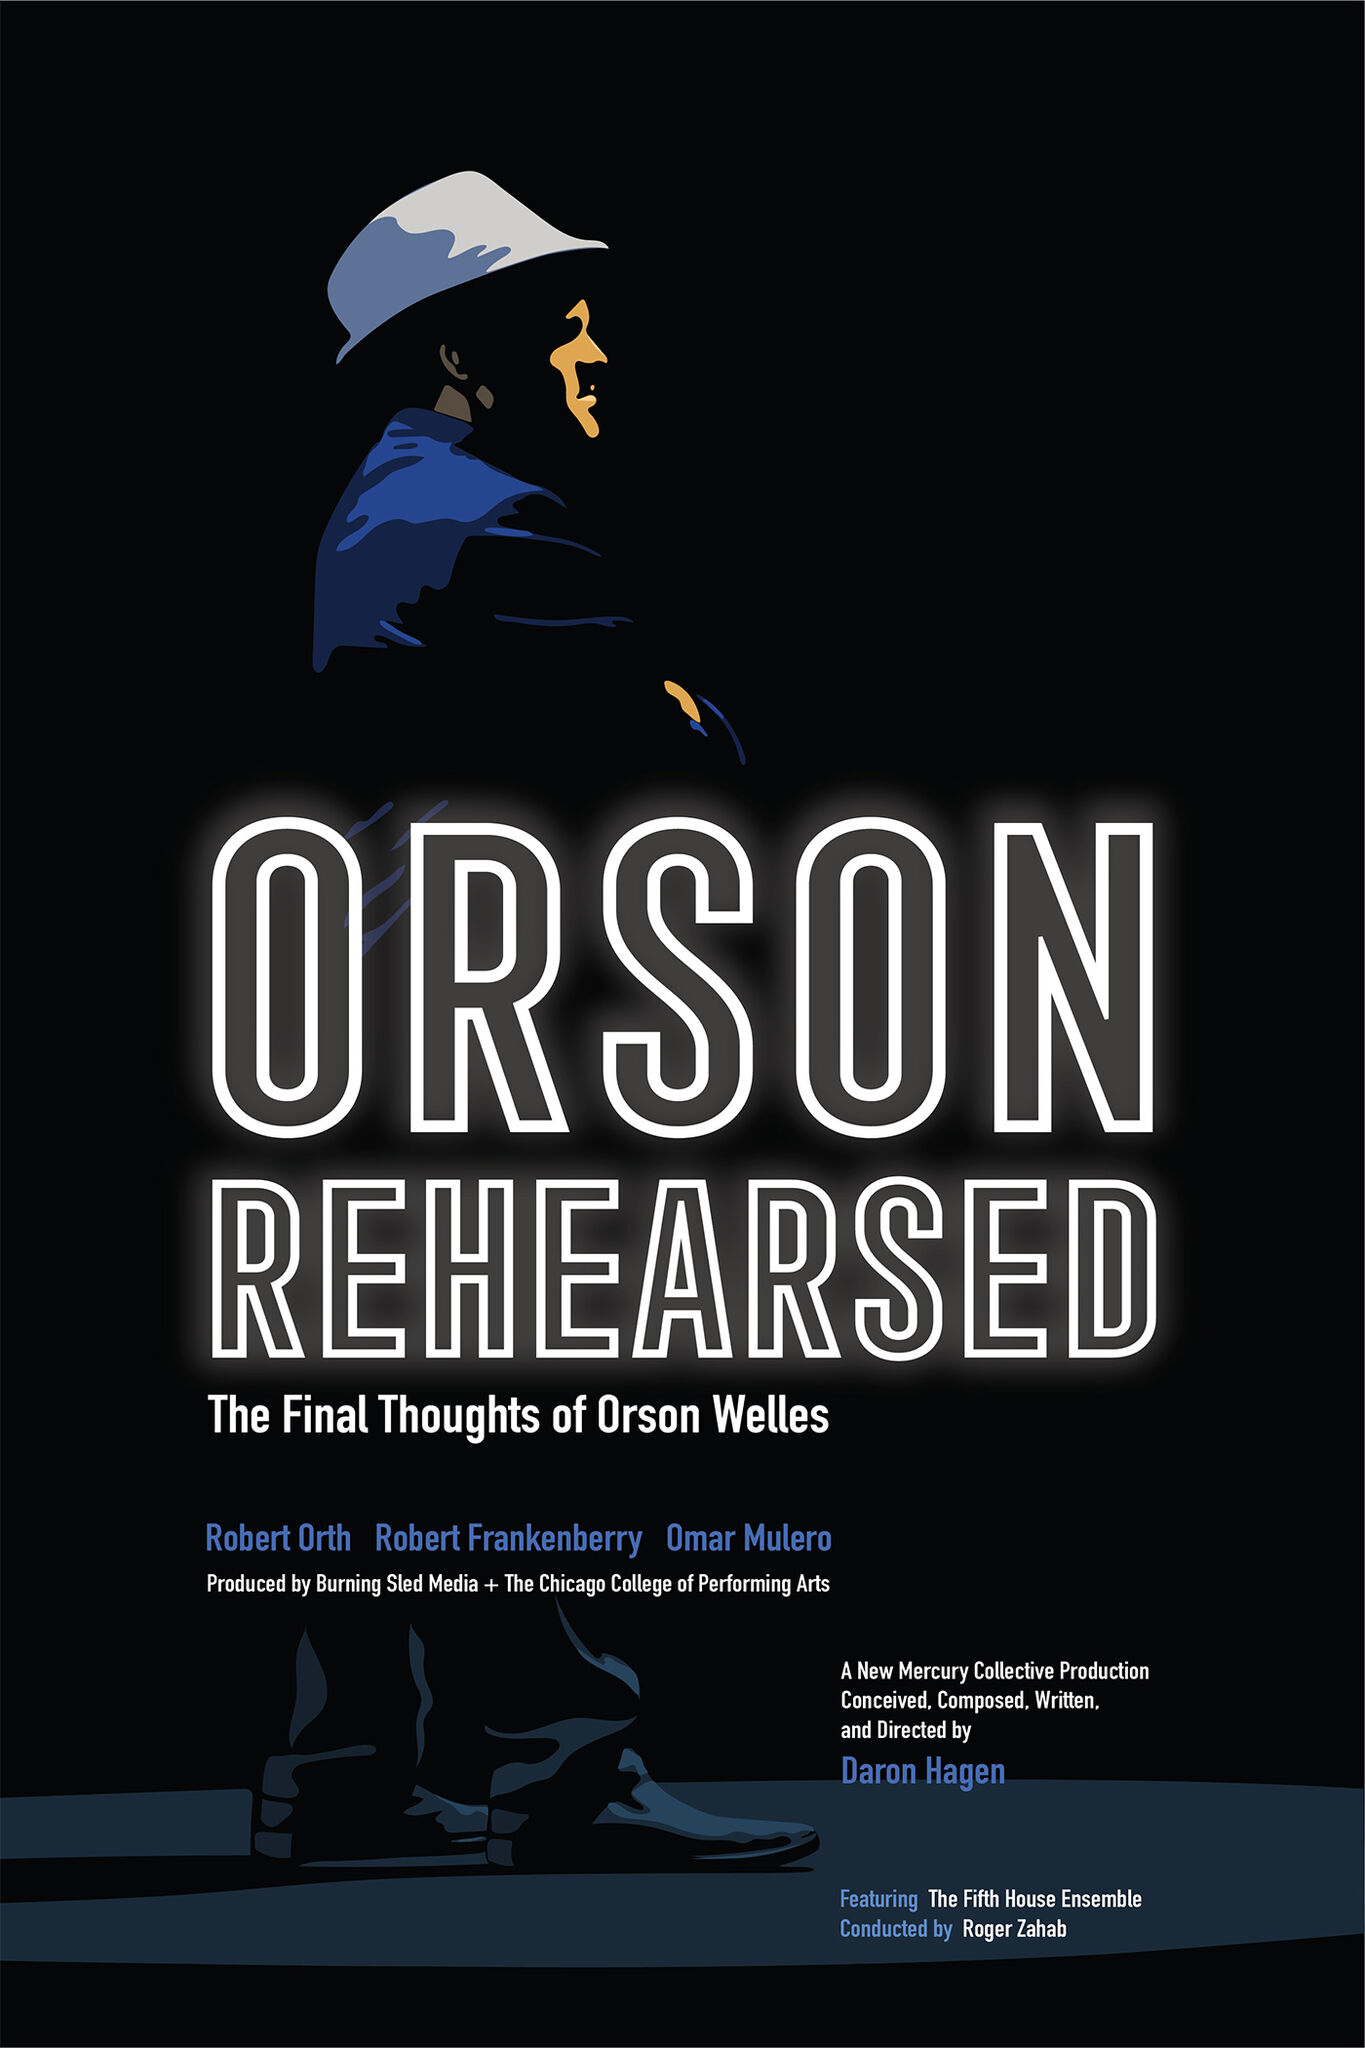 Orson Rehearsed